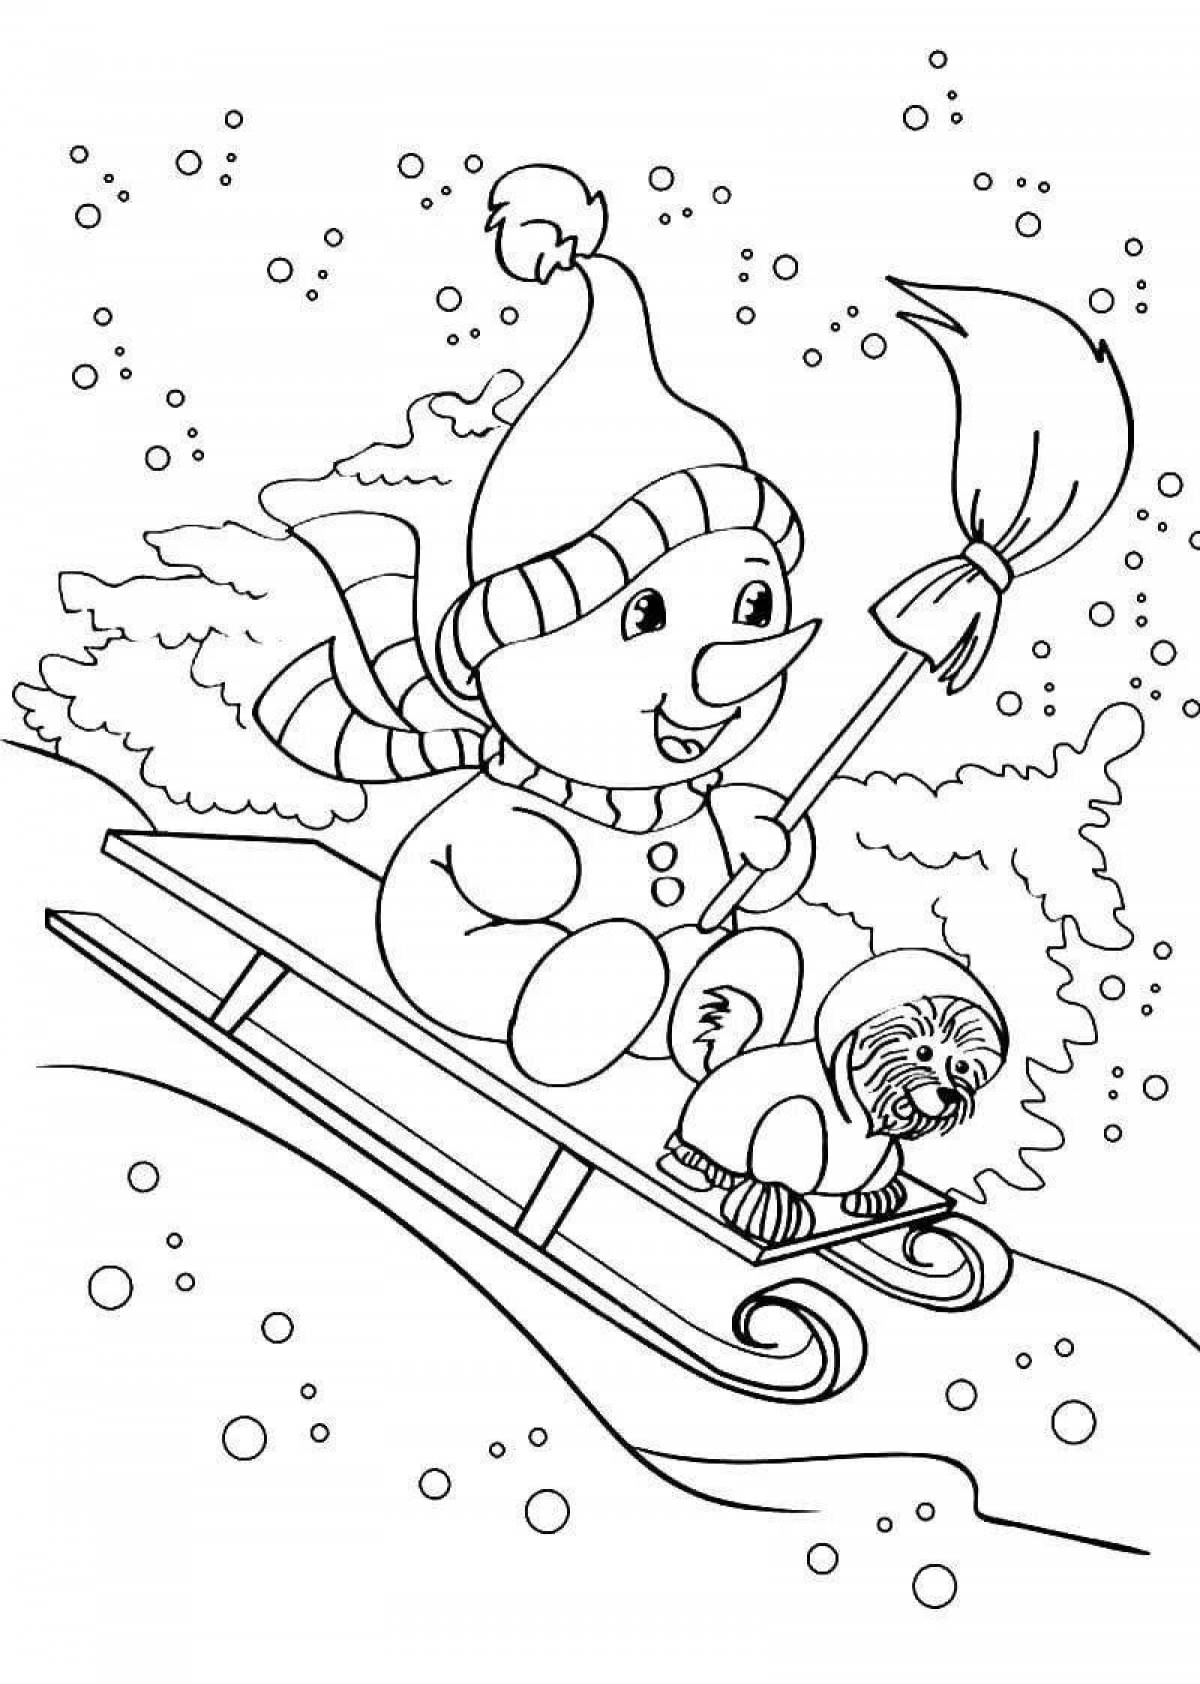 Sledding snowman #6